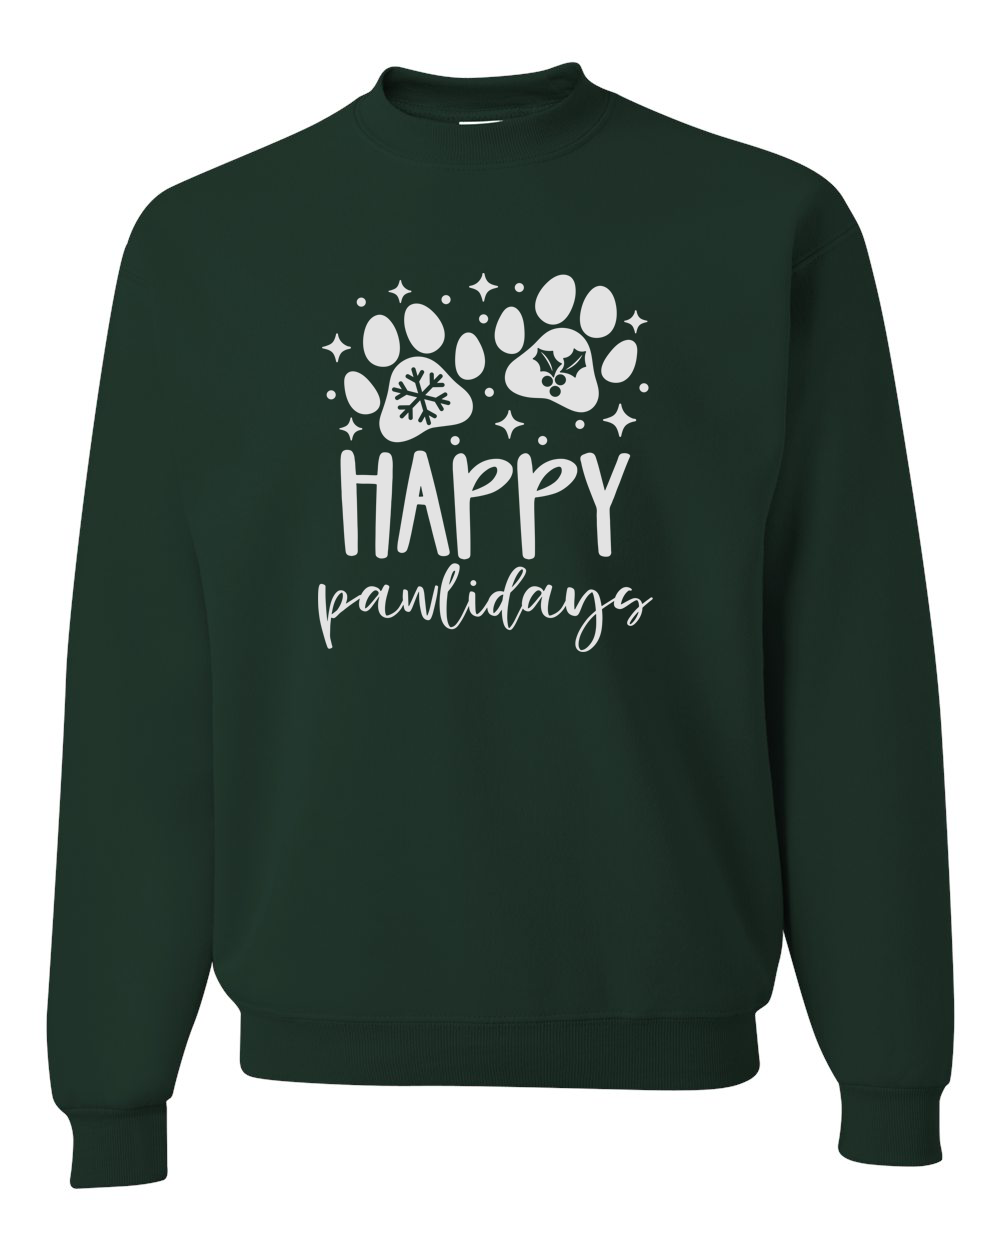 Trina & Friends design 4 non hooded sweatshirt